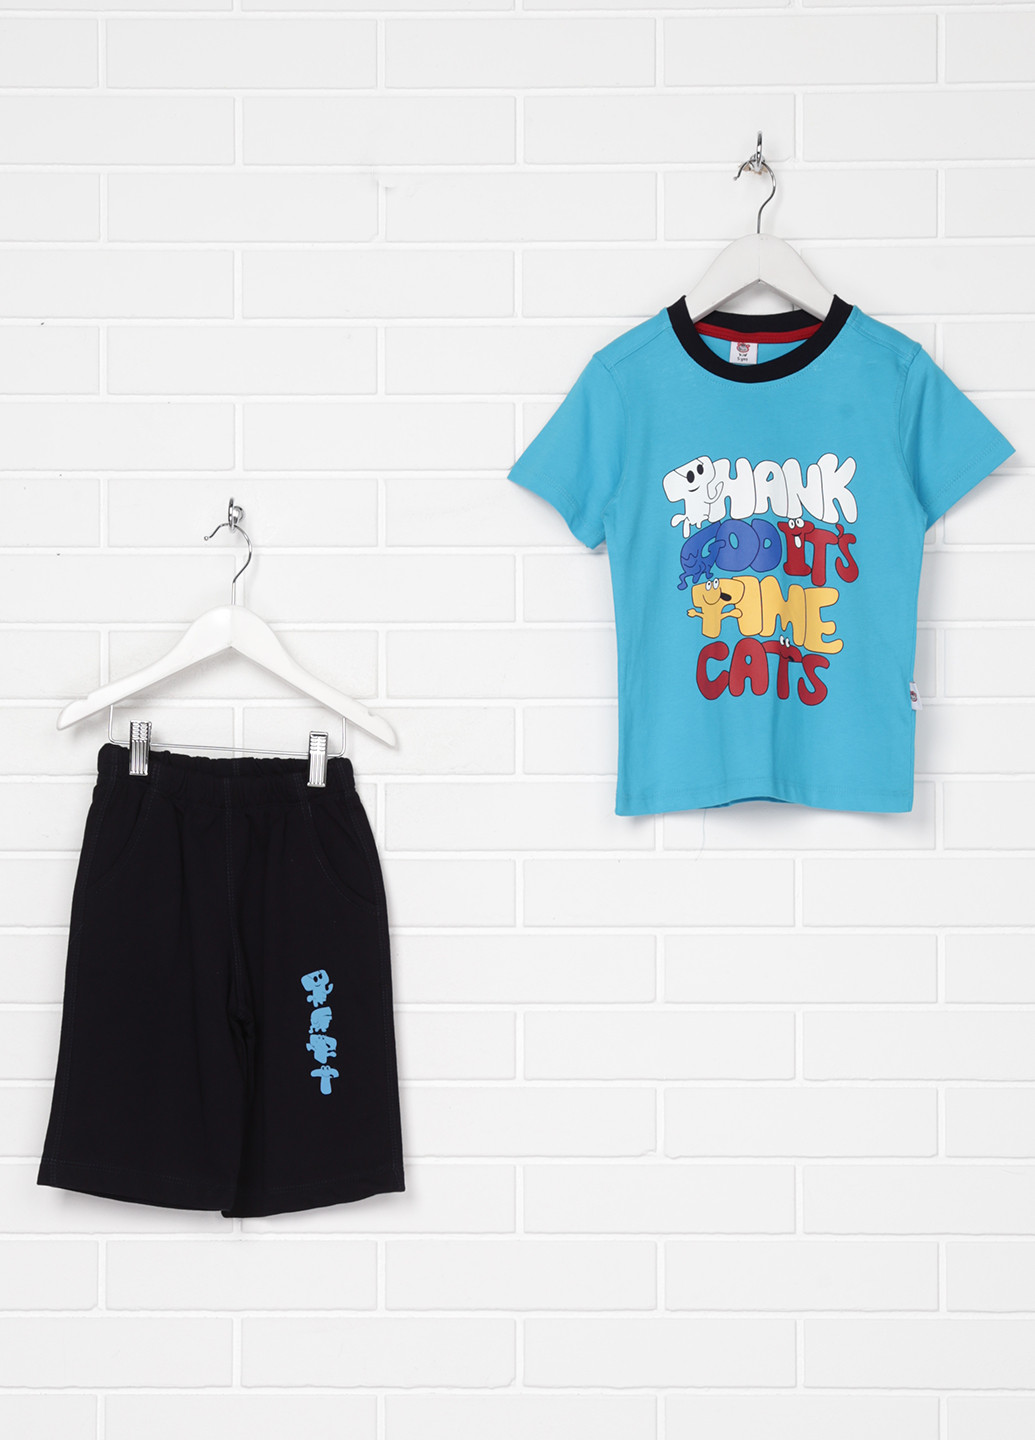 Темно-голубой летний комплект (футболка, шорты) Duna